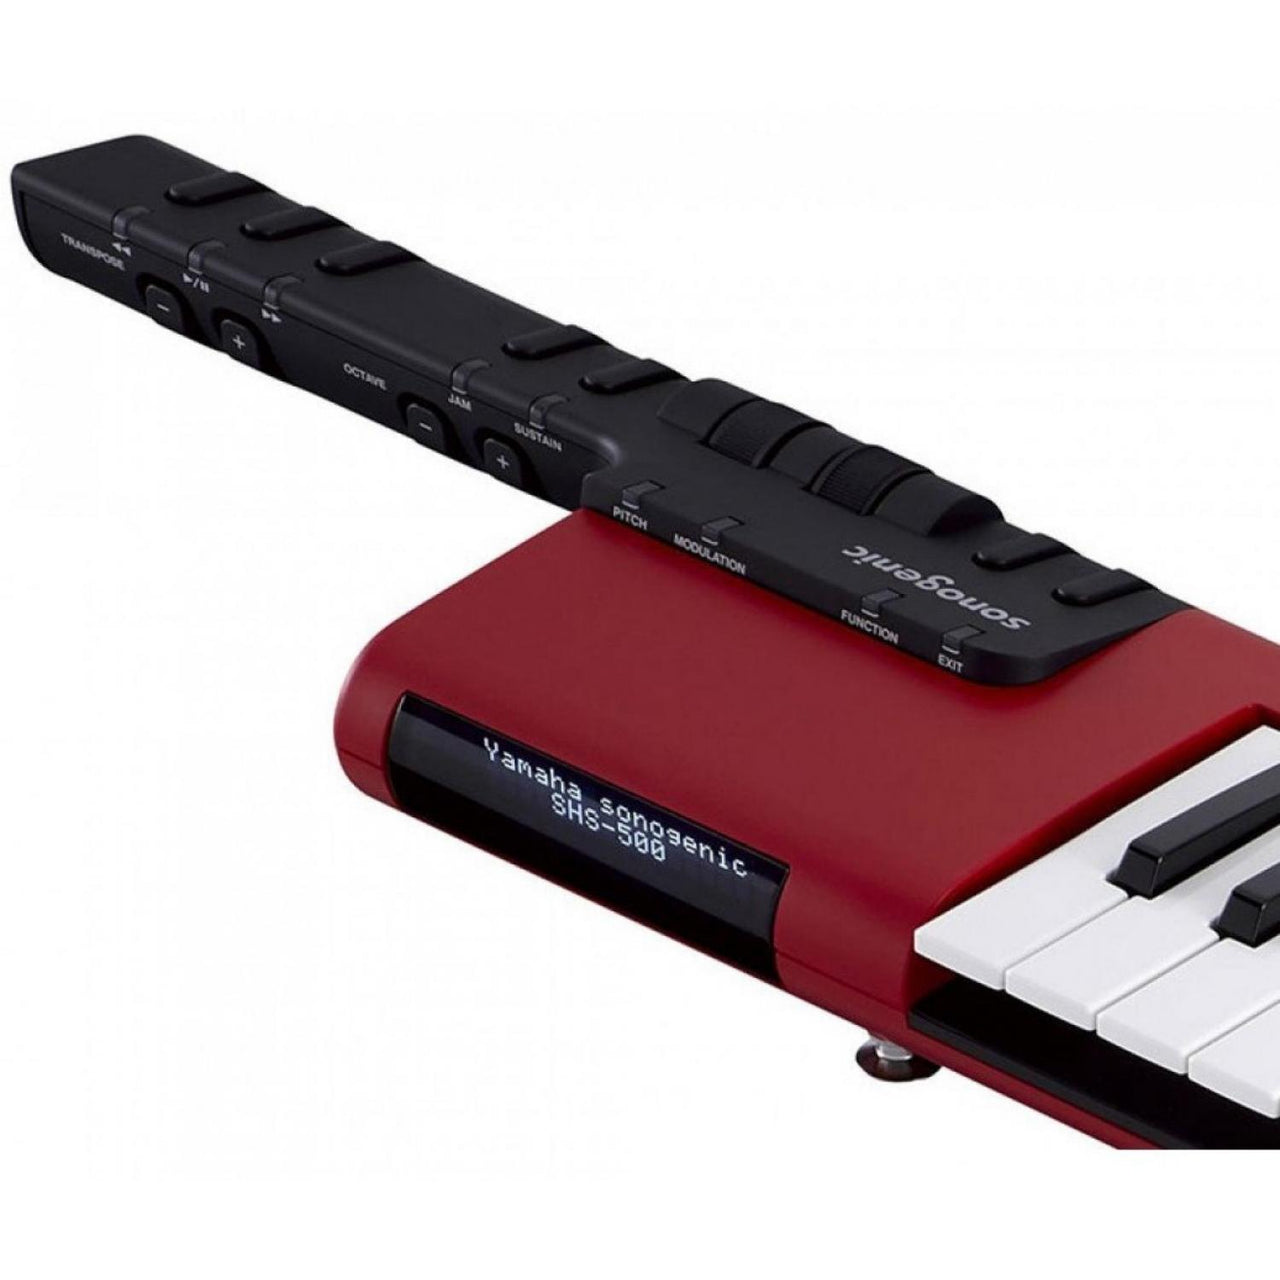 Keytar Yamaha C/Bluetooth, Shs-500rd